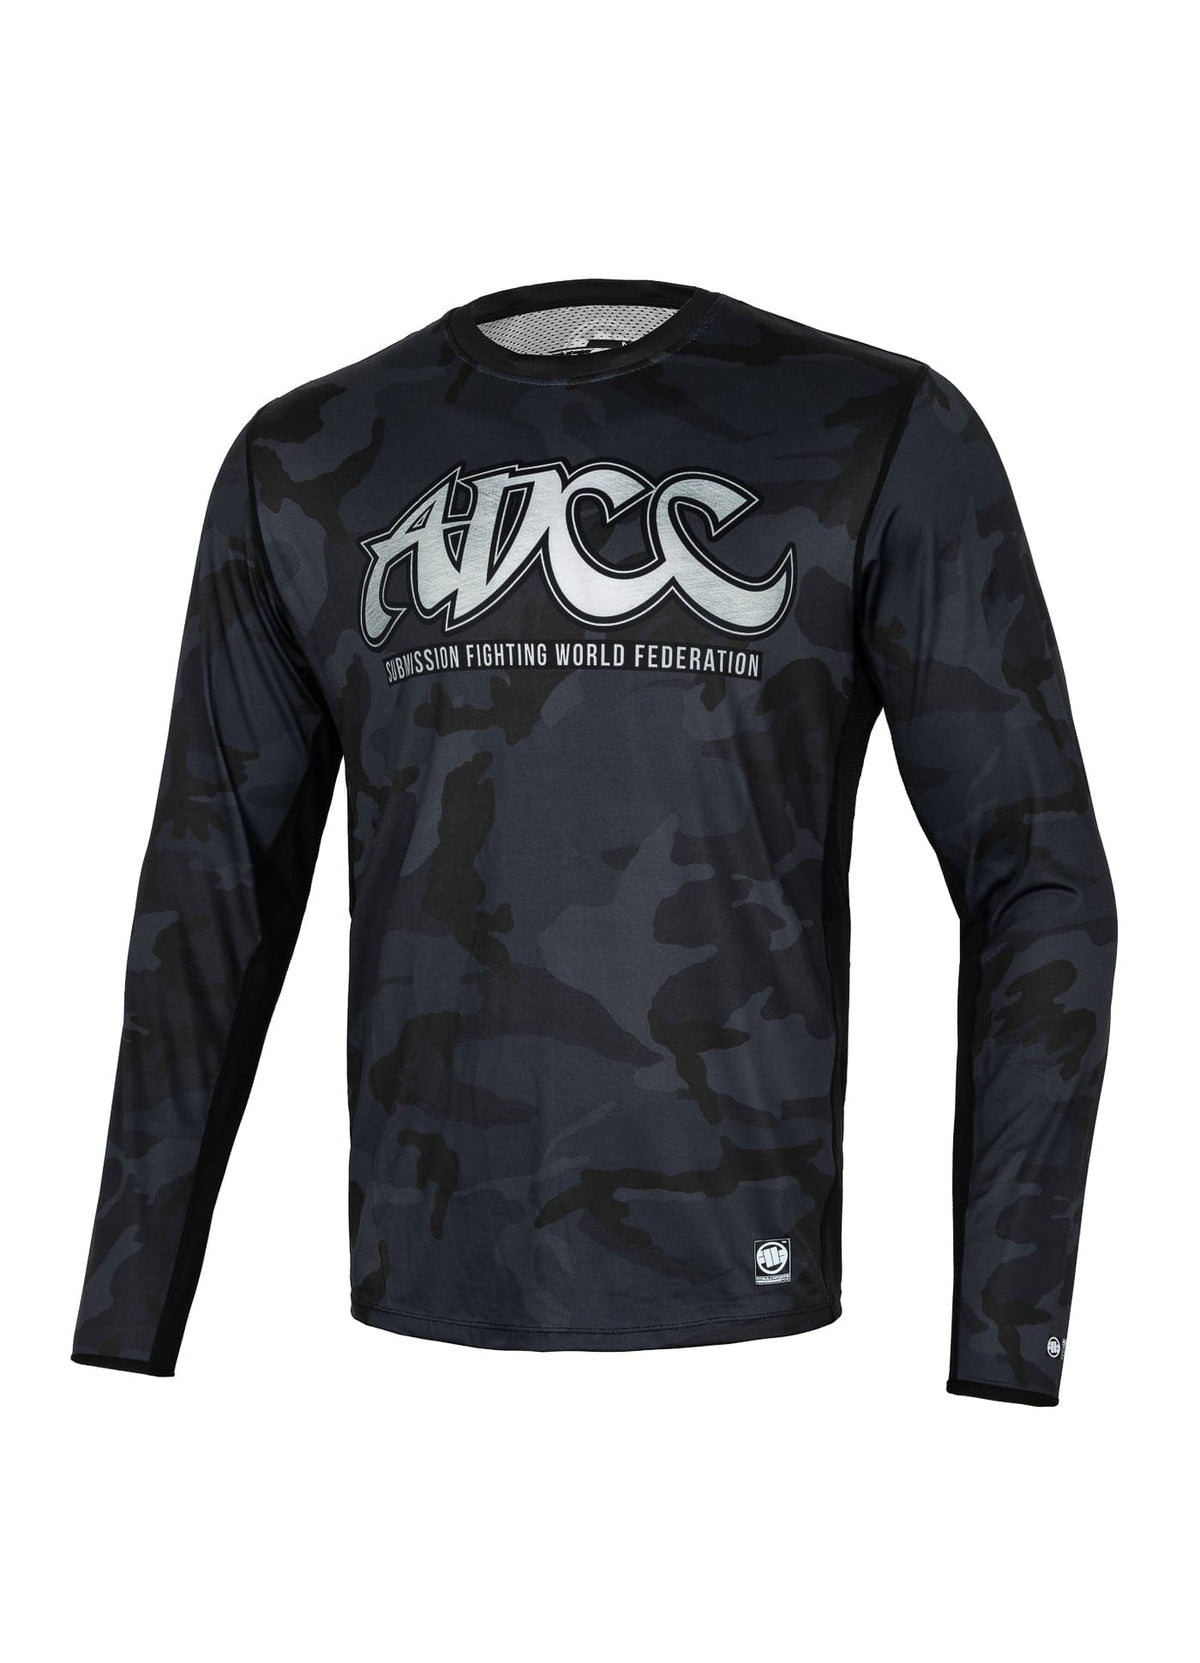 ADCC 2 All Black Camo Mesh Longsleeve T-shirt.